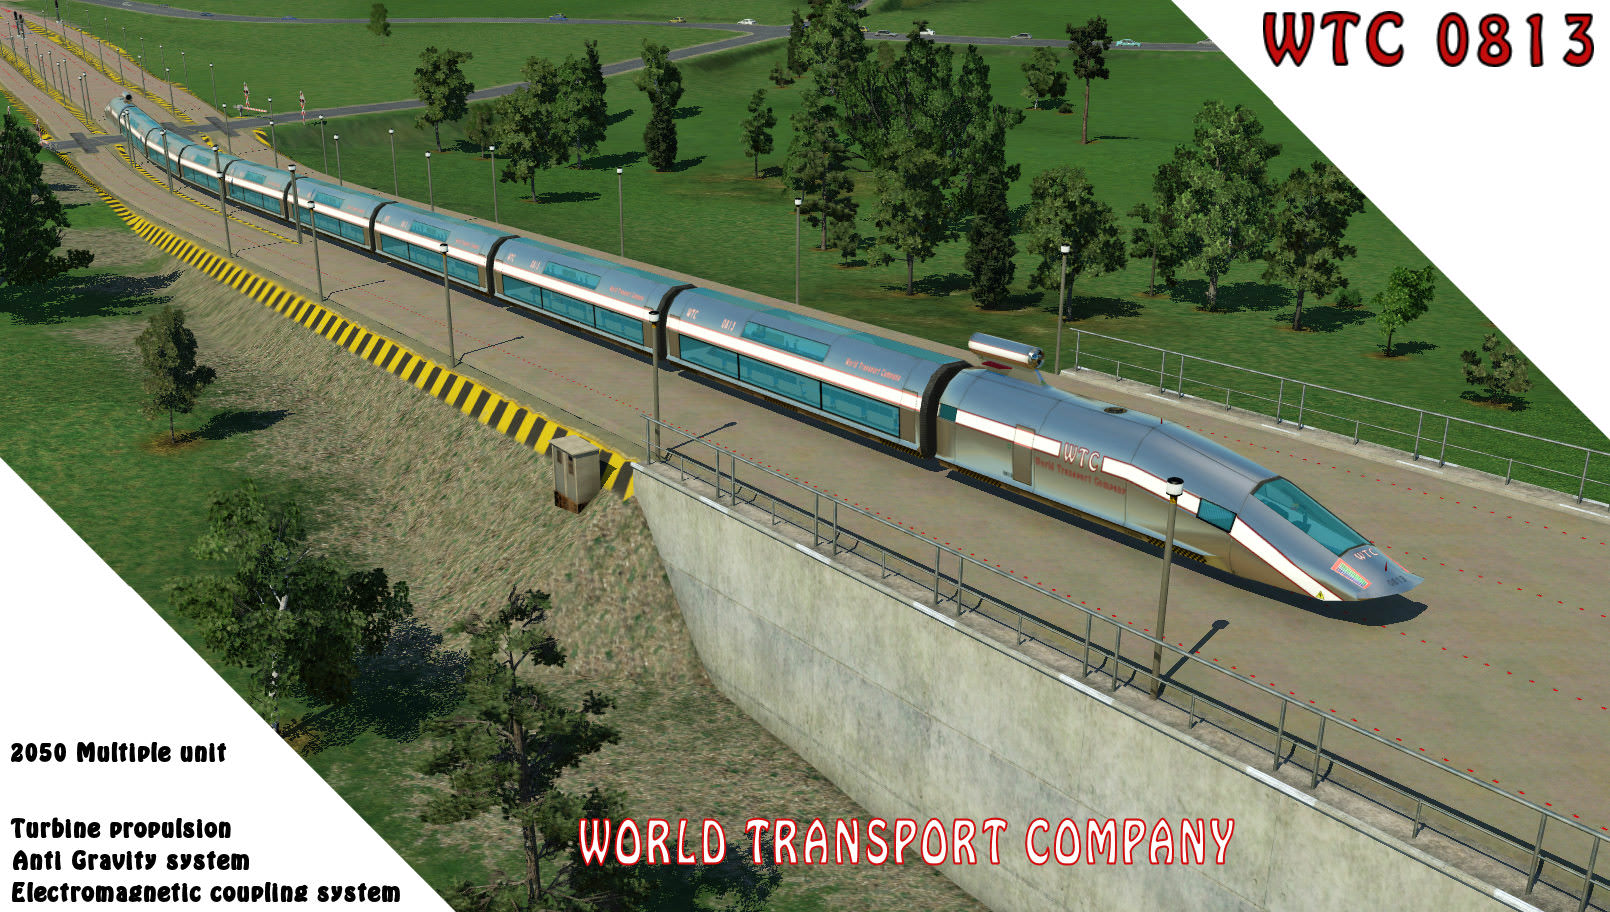 World Transport Company